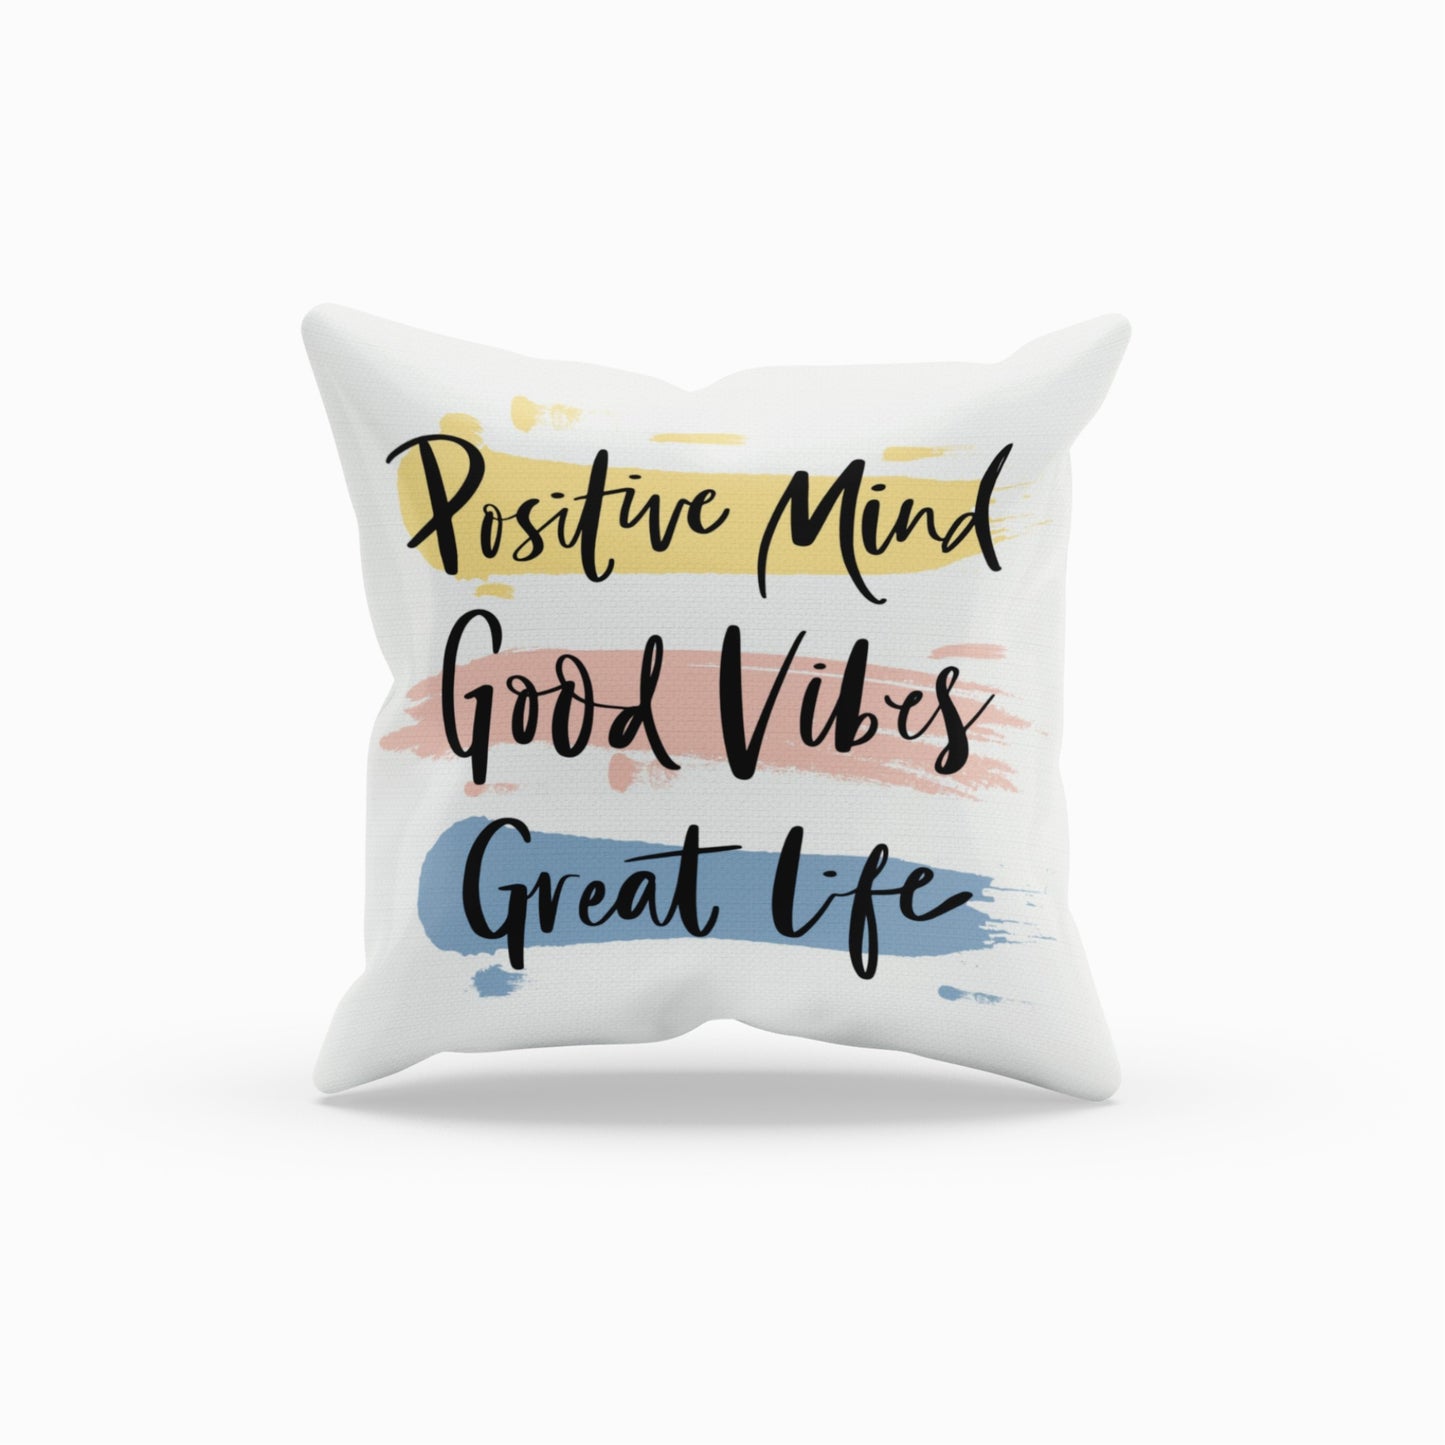 Homeezone's Positive Mind Theme Pillow